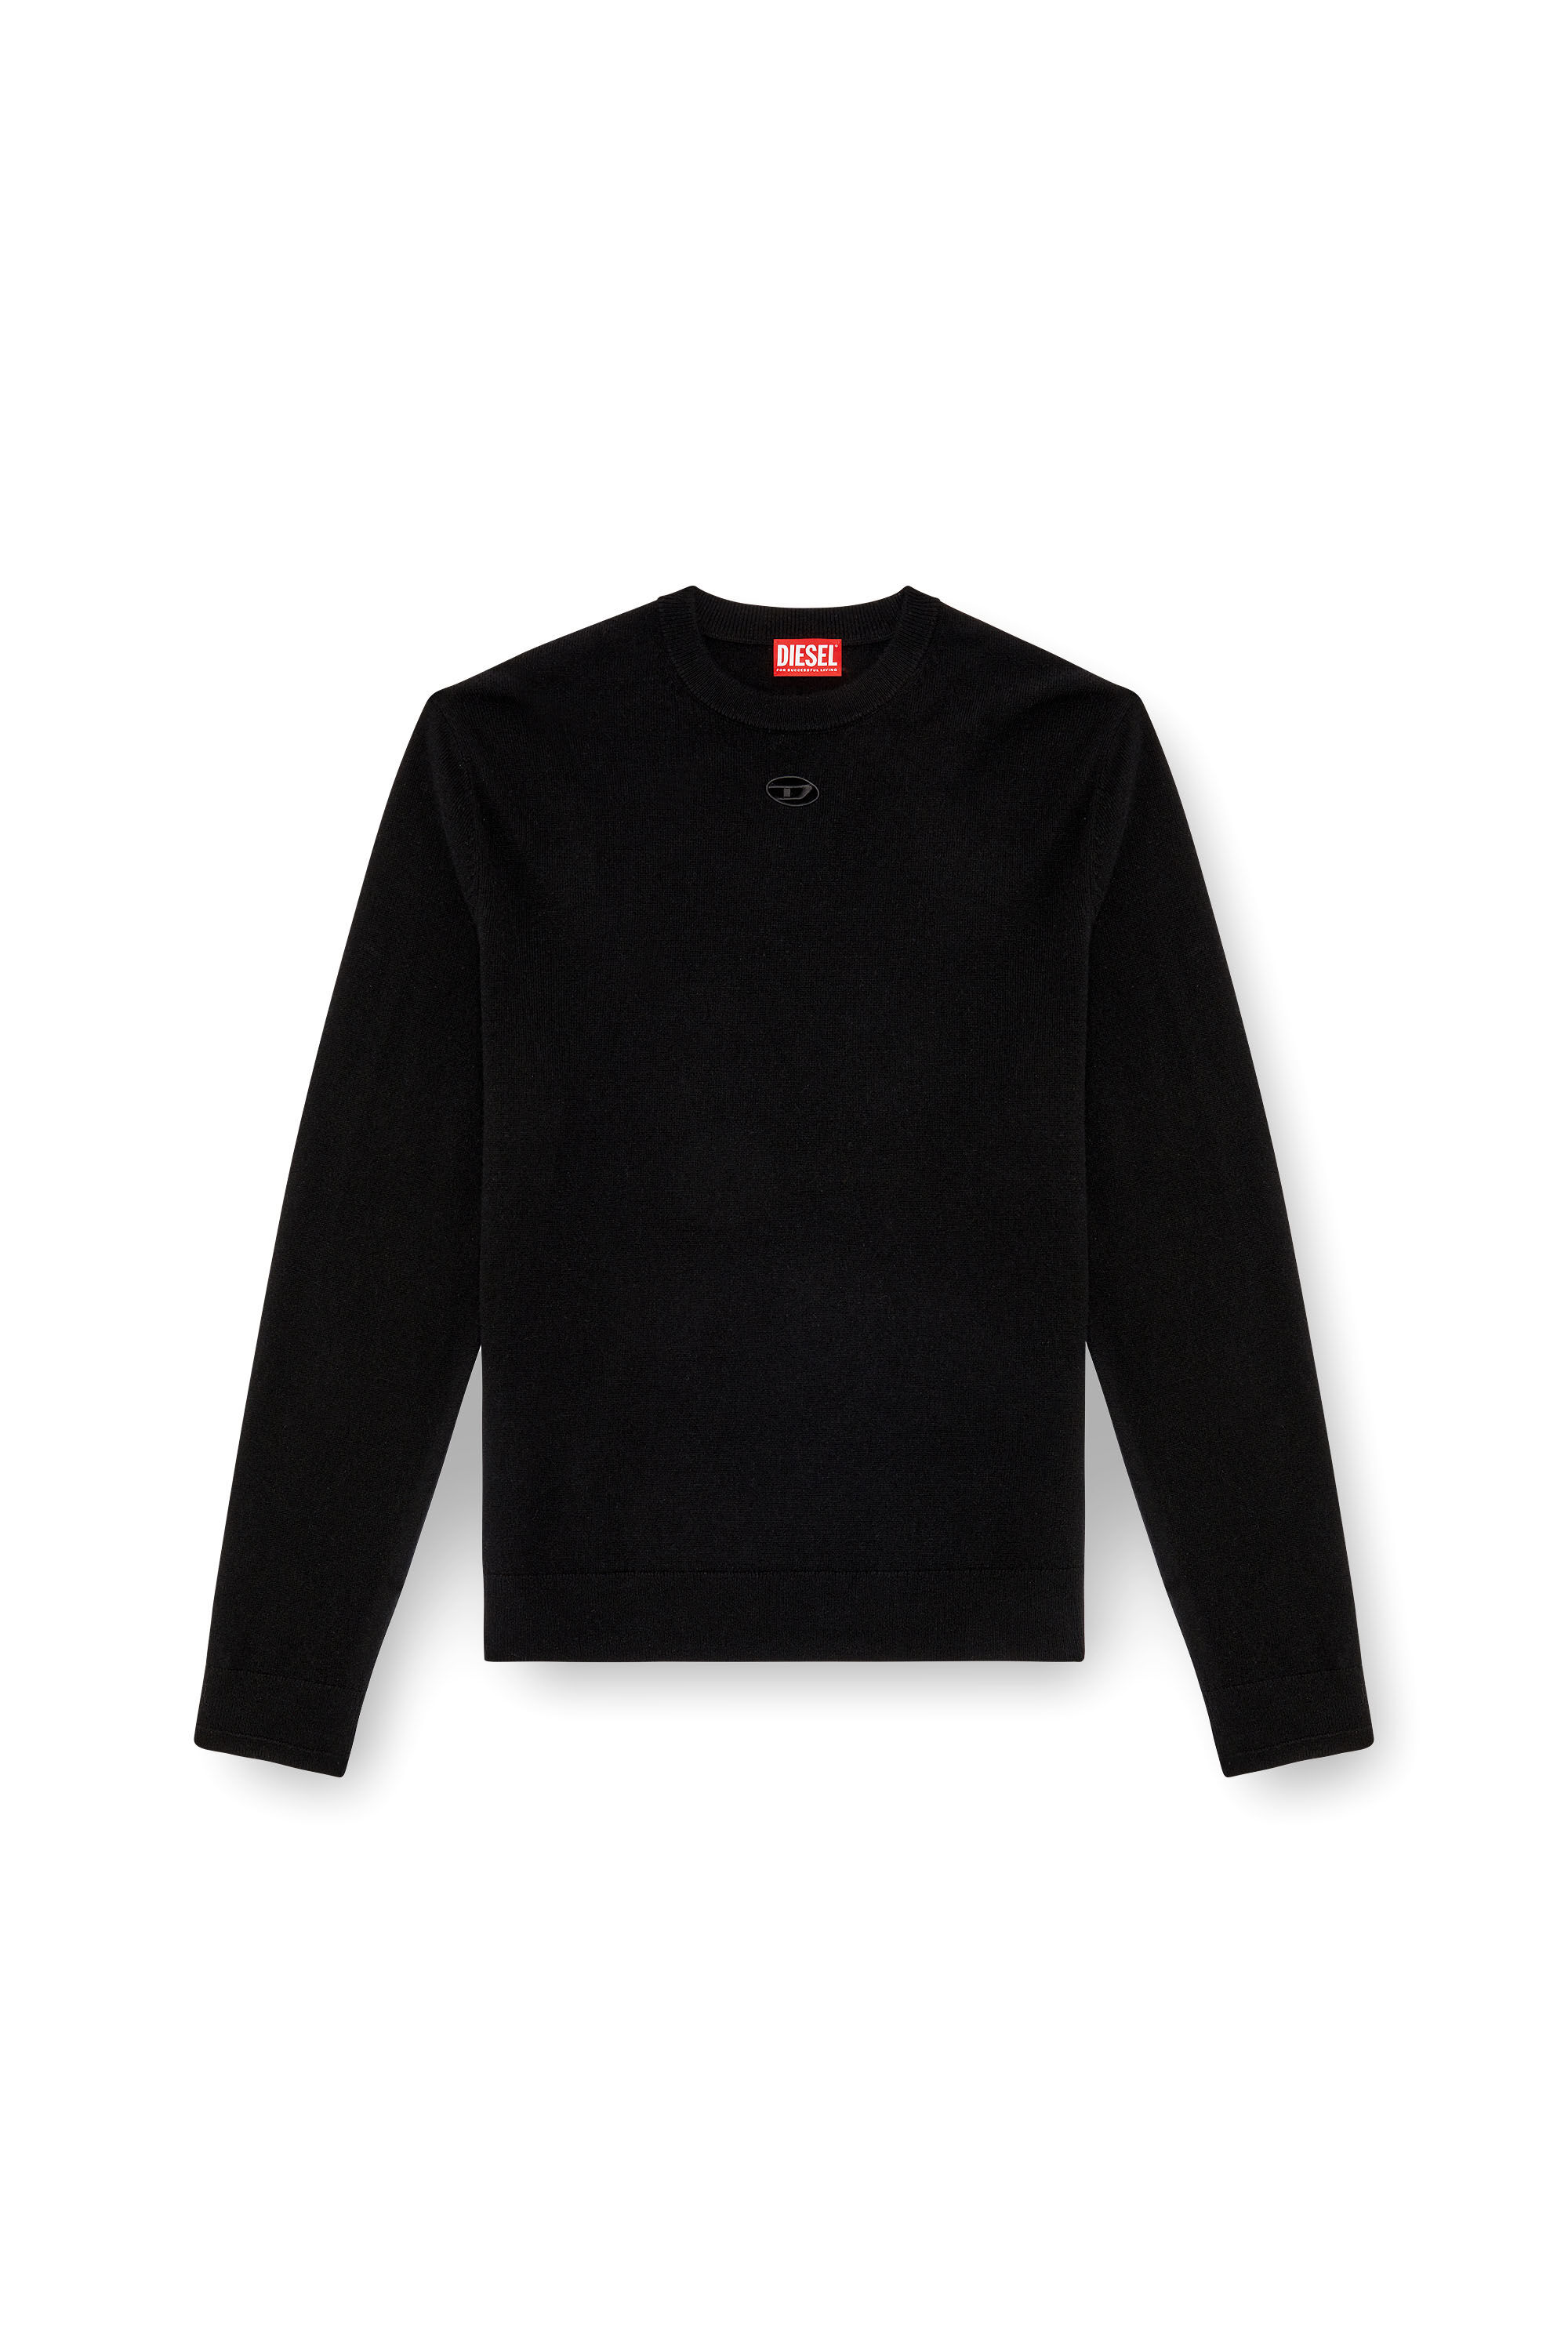 Diesel - K-VIERI, Male Wool and cashmere jumper in Black - Image 2